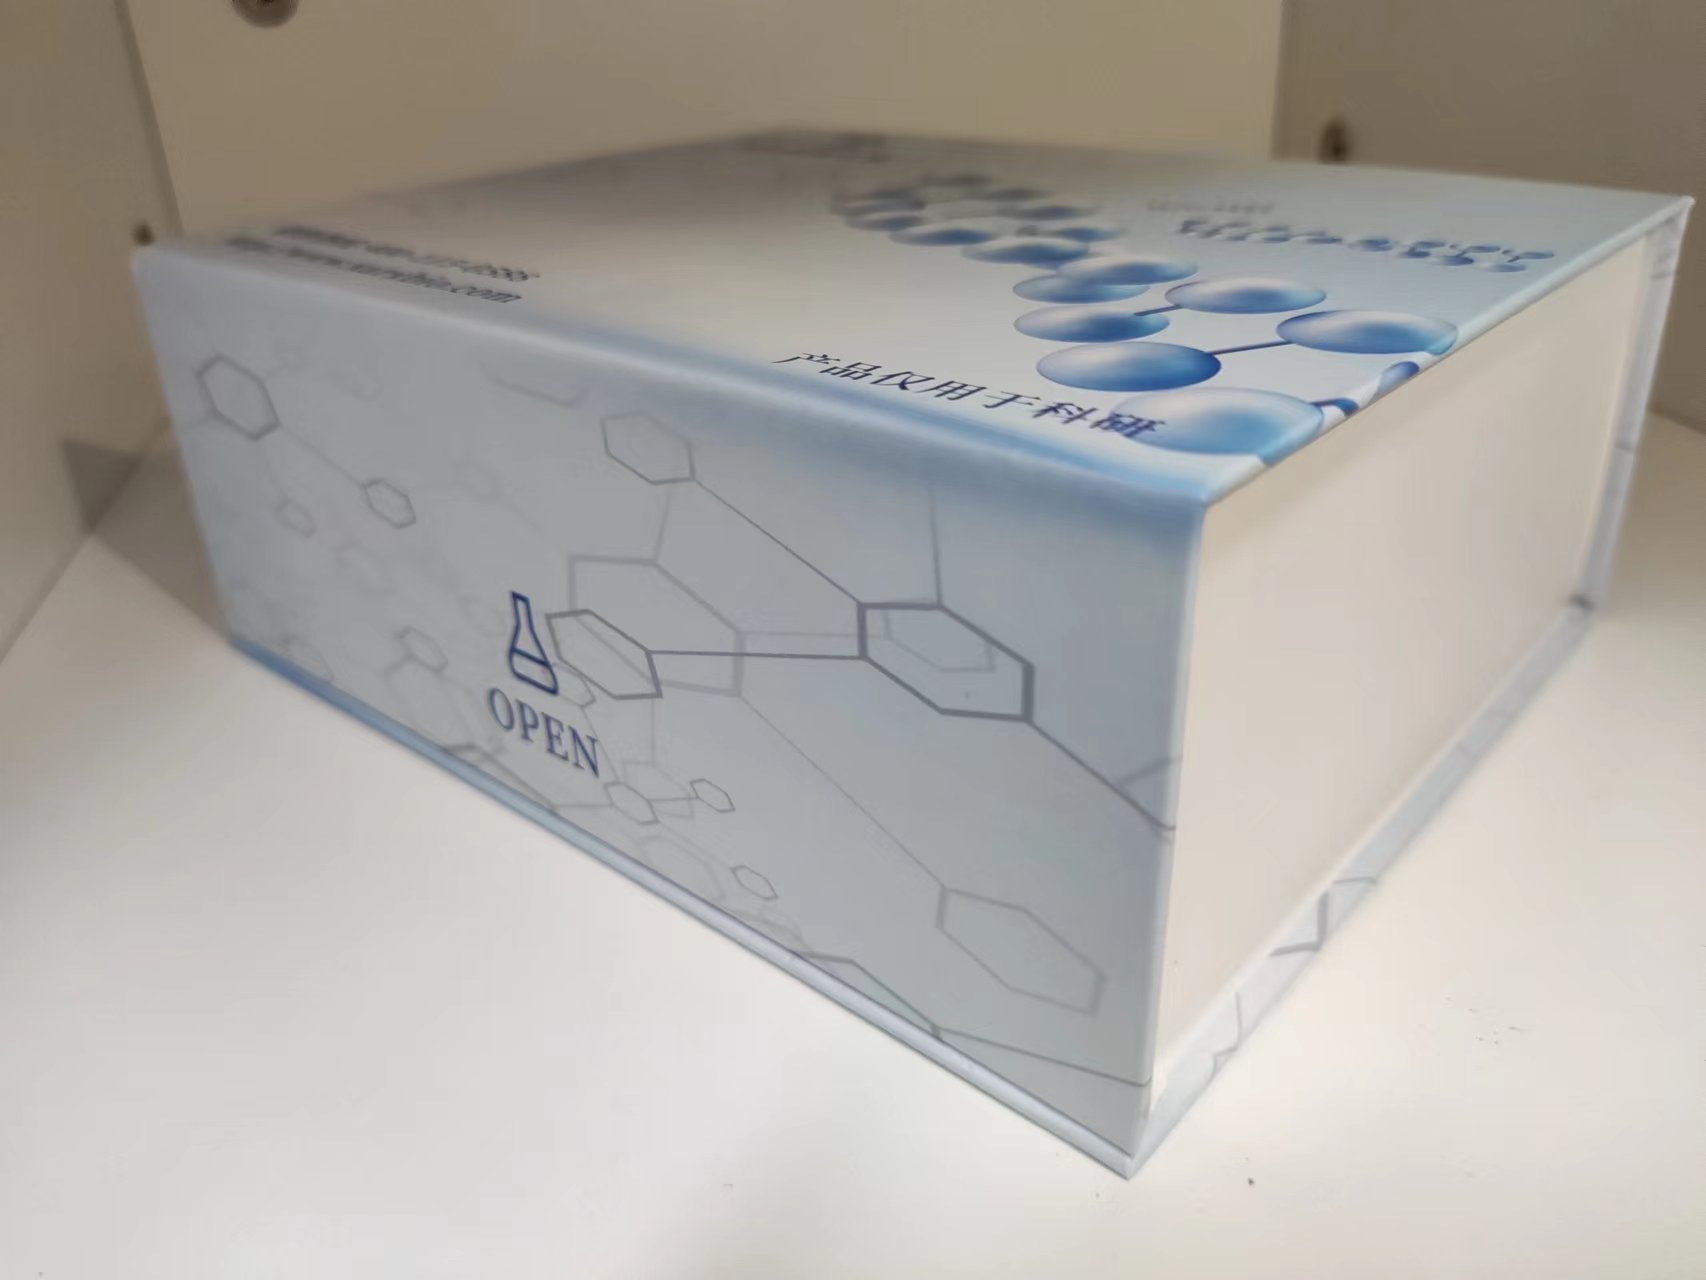   FITC荧光标记抗体/蛋白试剂盒 (10~100 mg标记量)